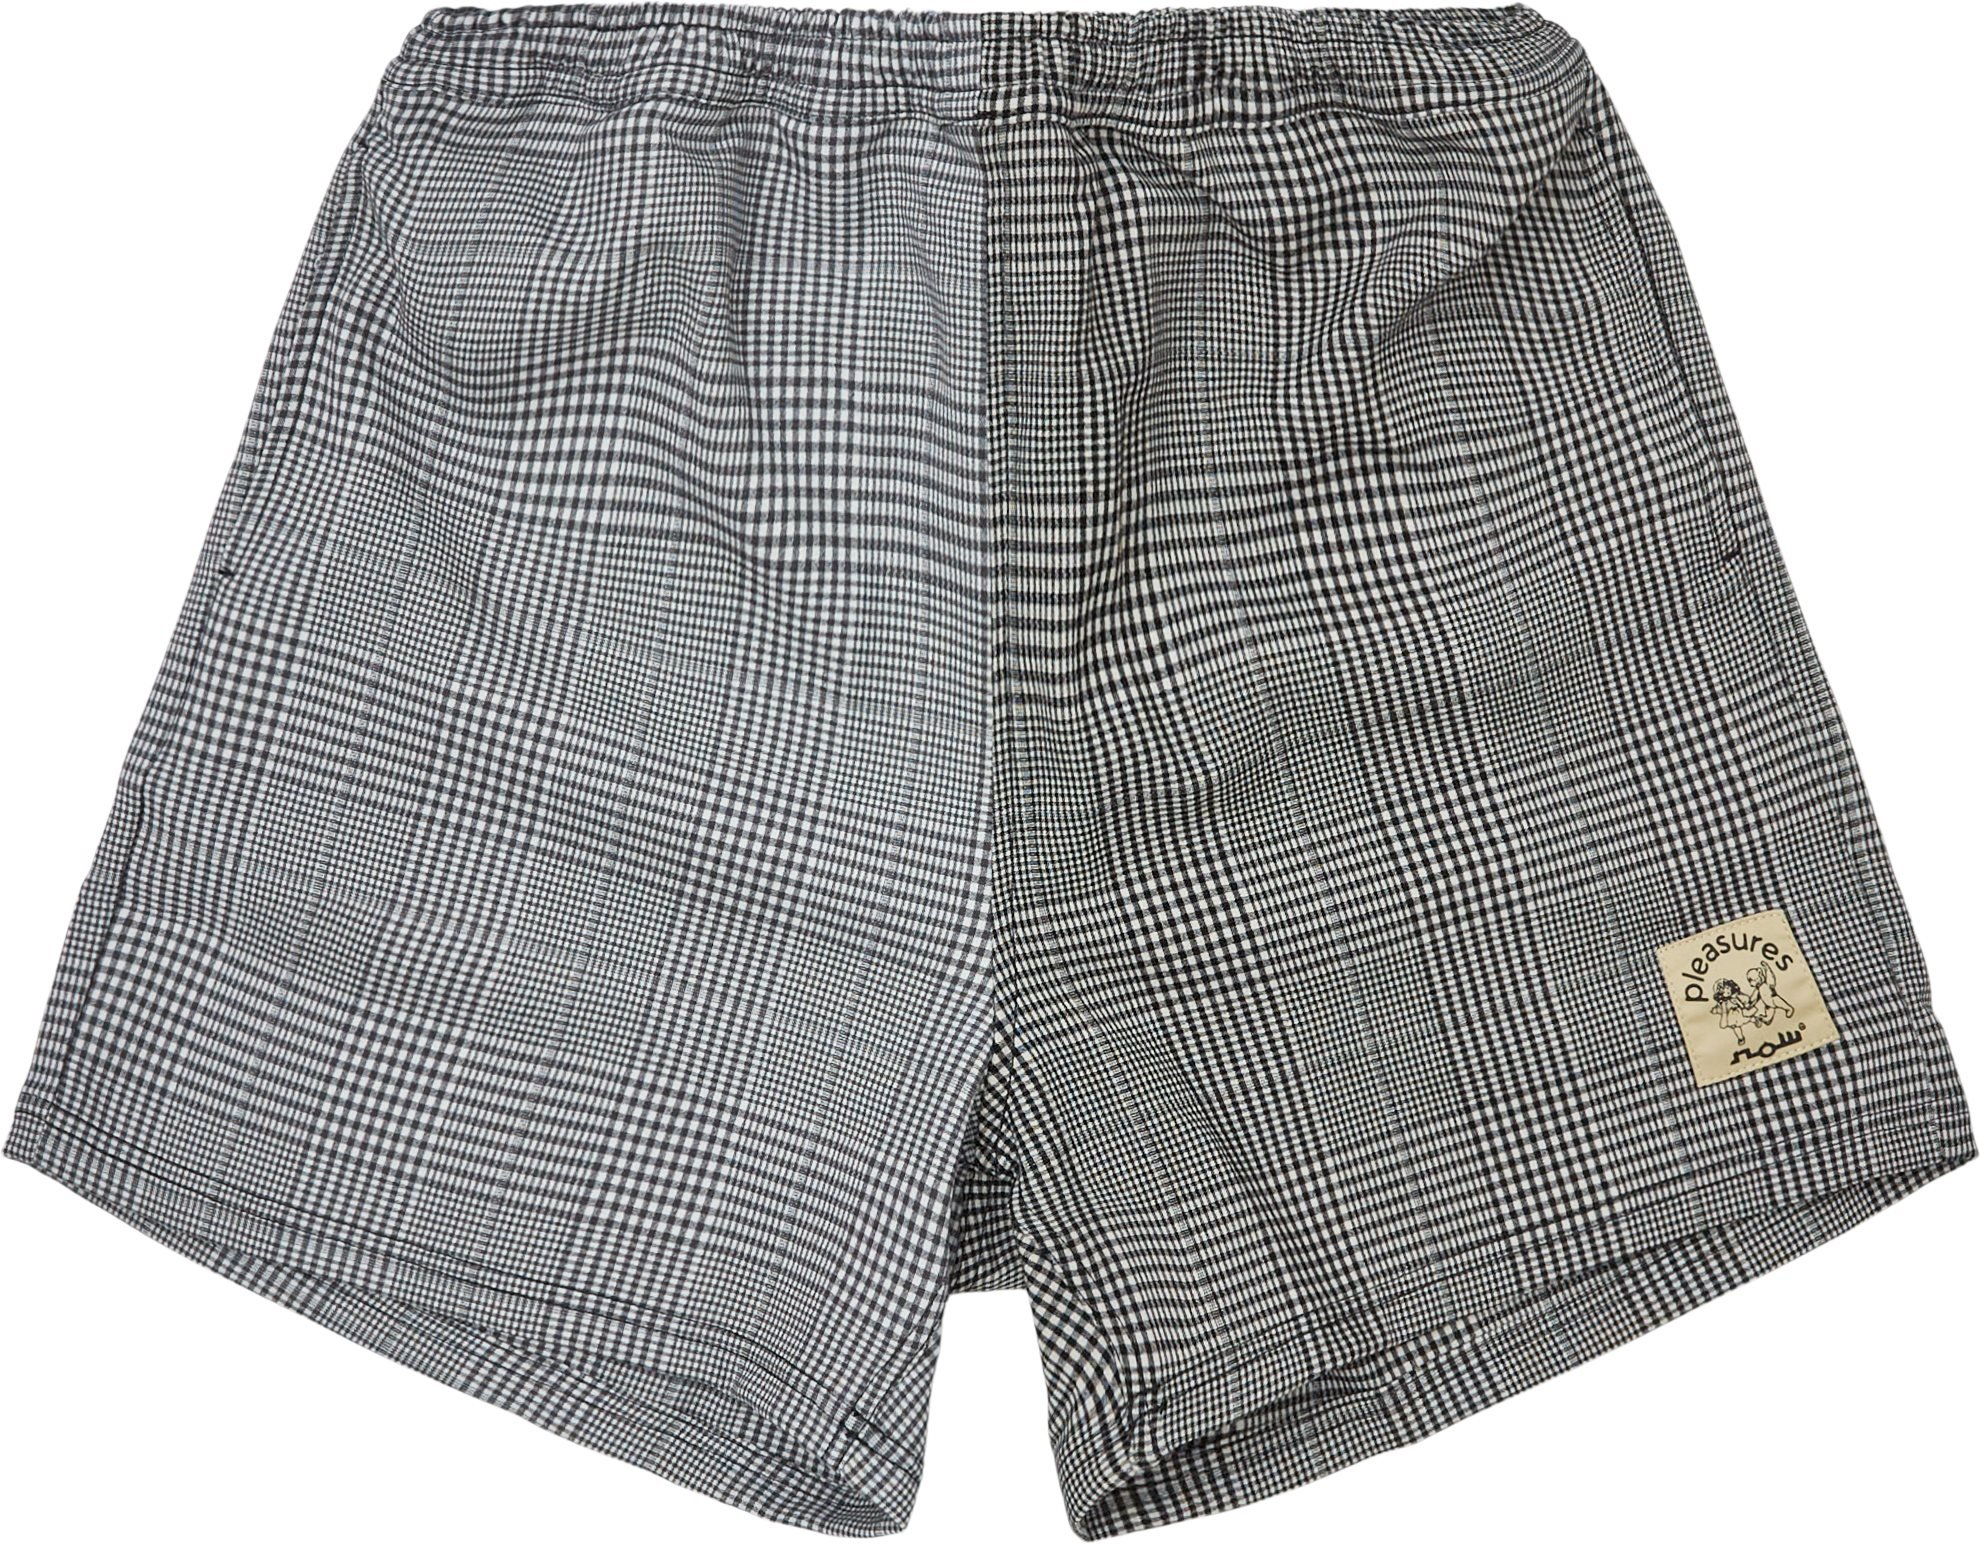 Chase Plaid Shorts - Shorts - Regular fit - Black